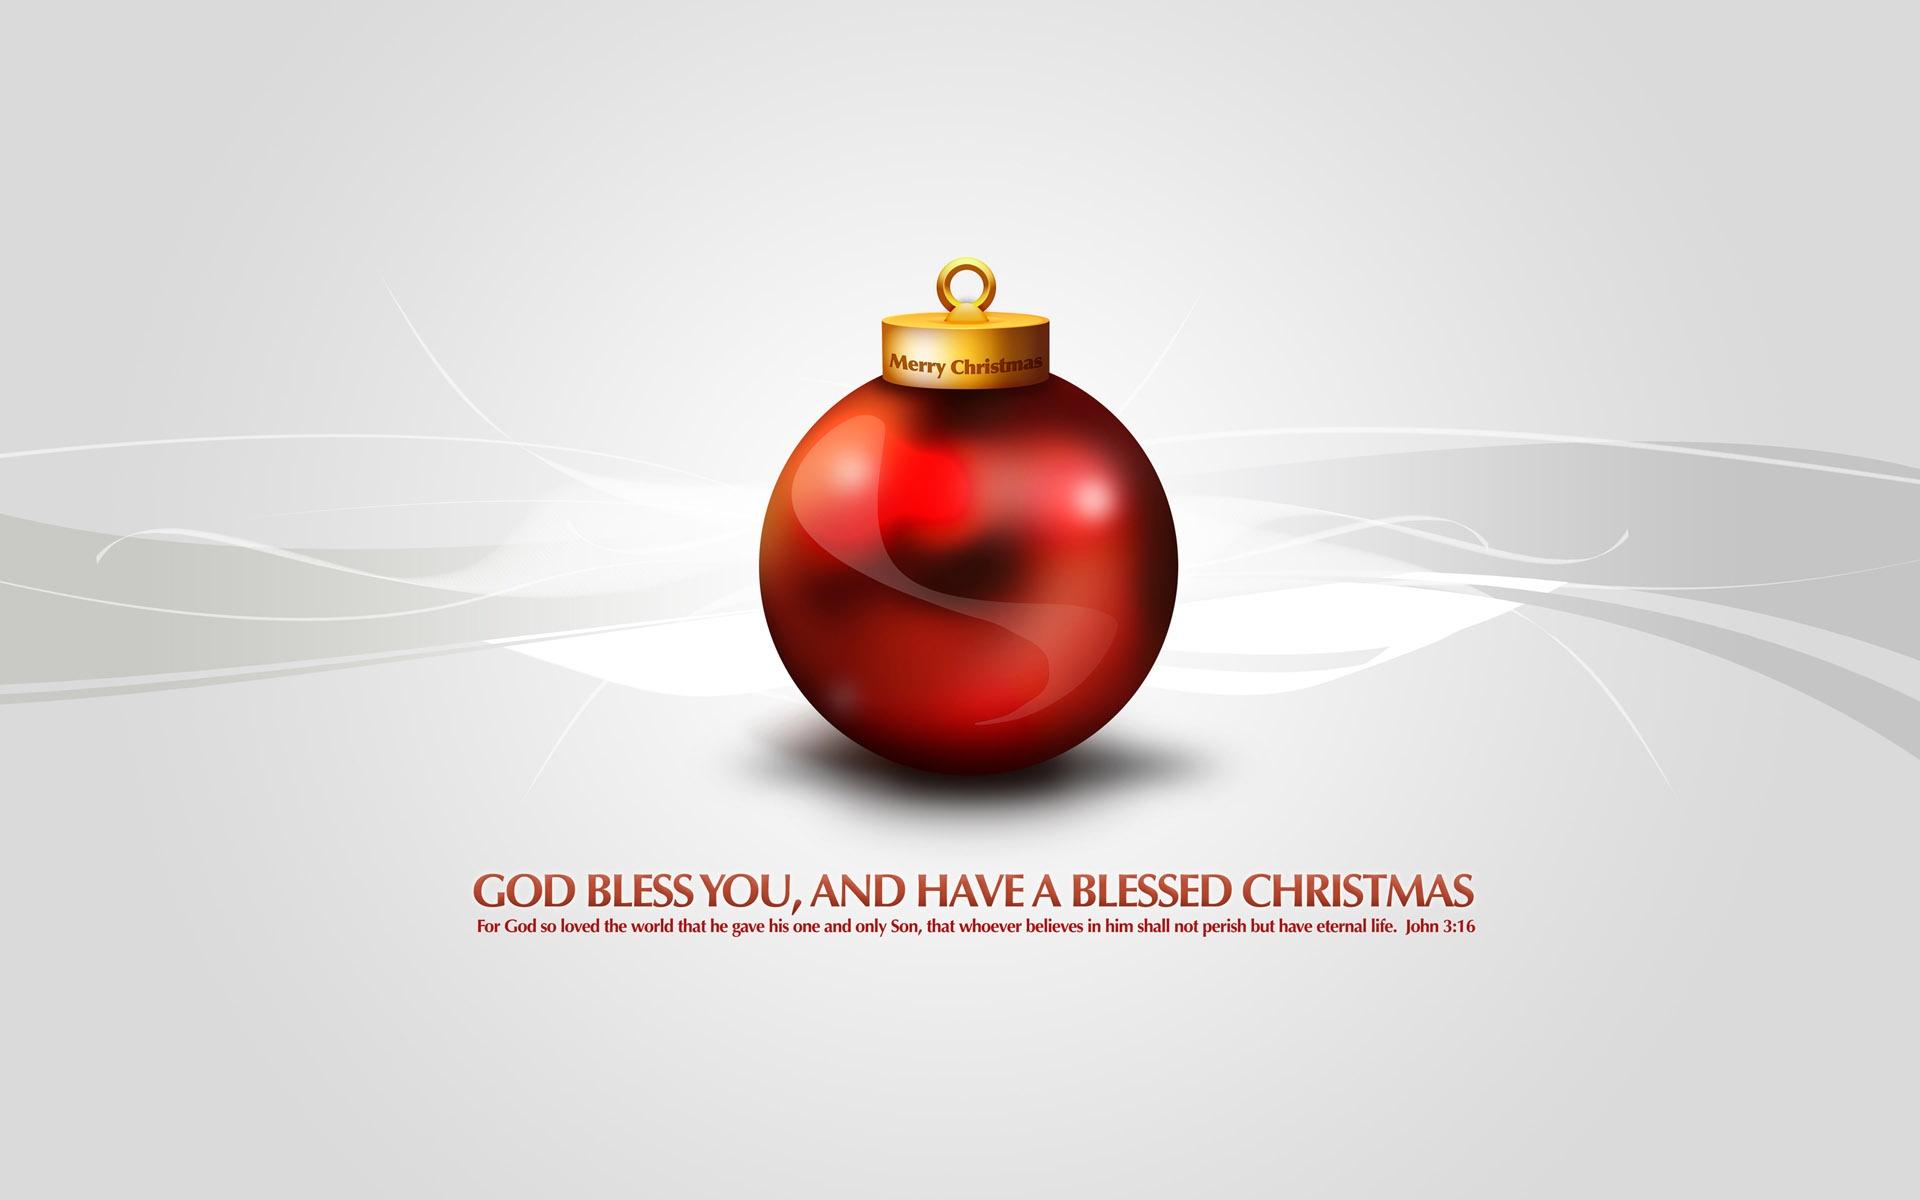 Merry Christmas God Bless You Wallpaper in jpg format